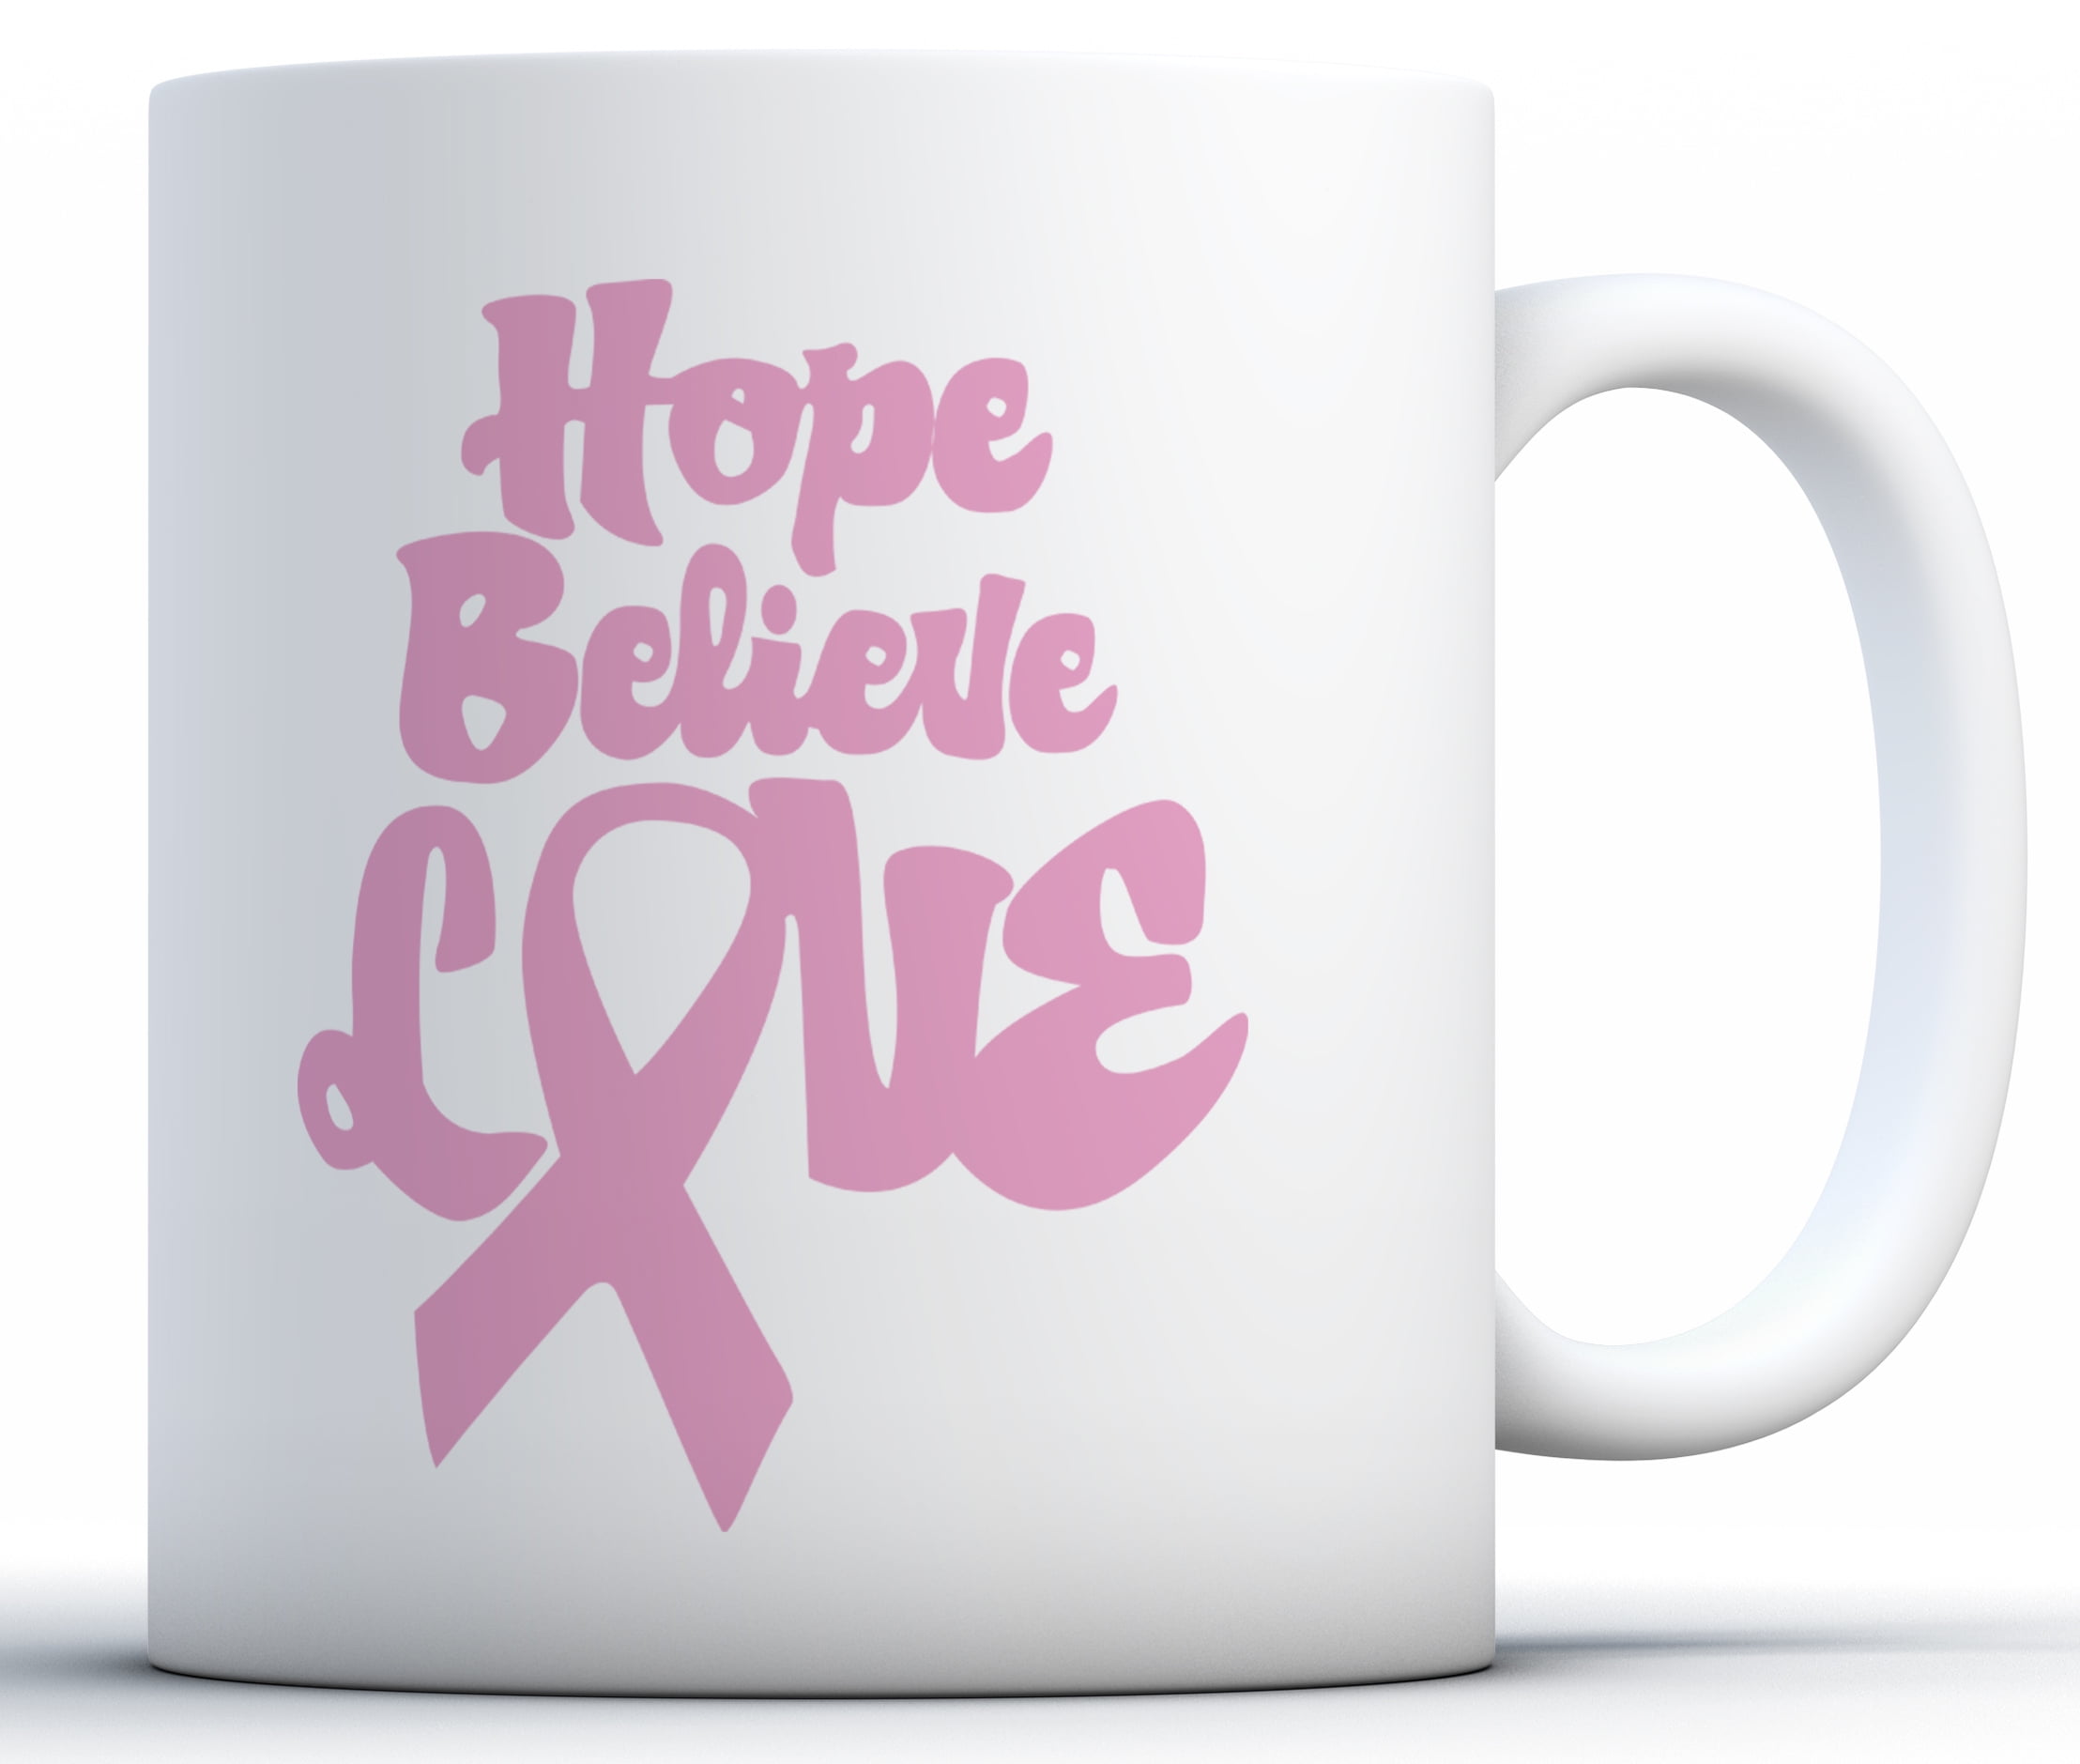 Pink Ribbon Spreading Awareness Strength Courage Morning Routine Tea Coffee Cider Taking Care Drinking Comfort 11oz Ceramic Mug